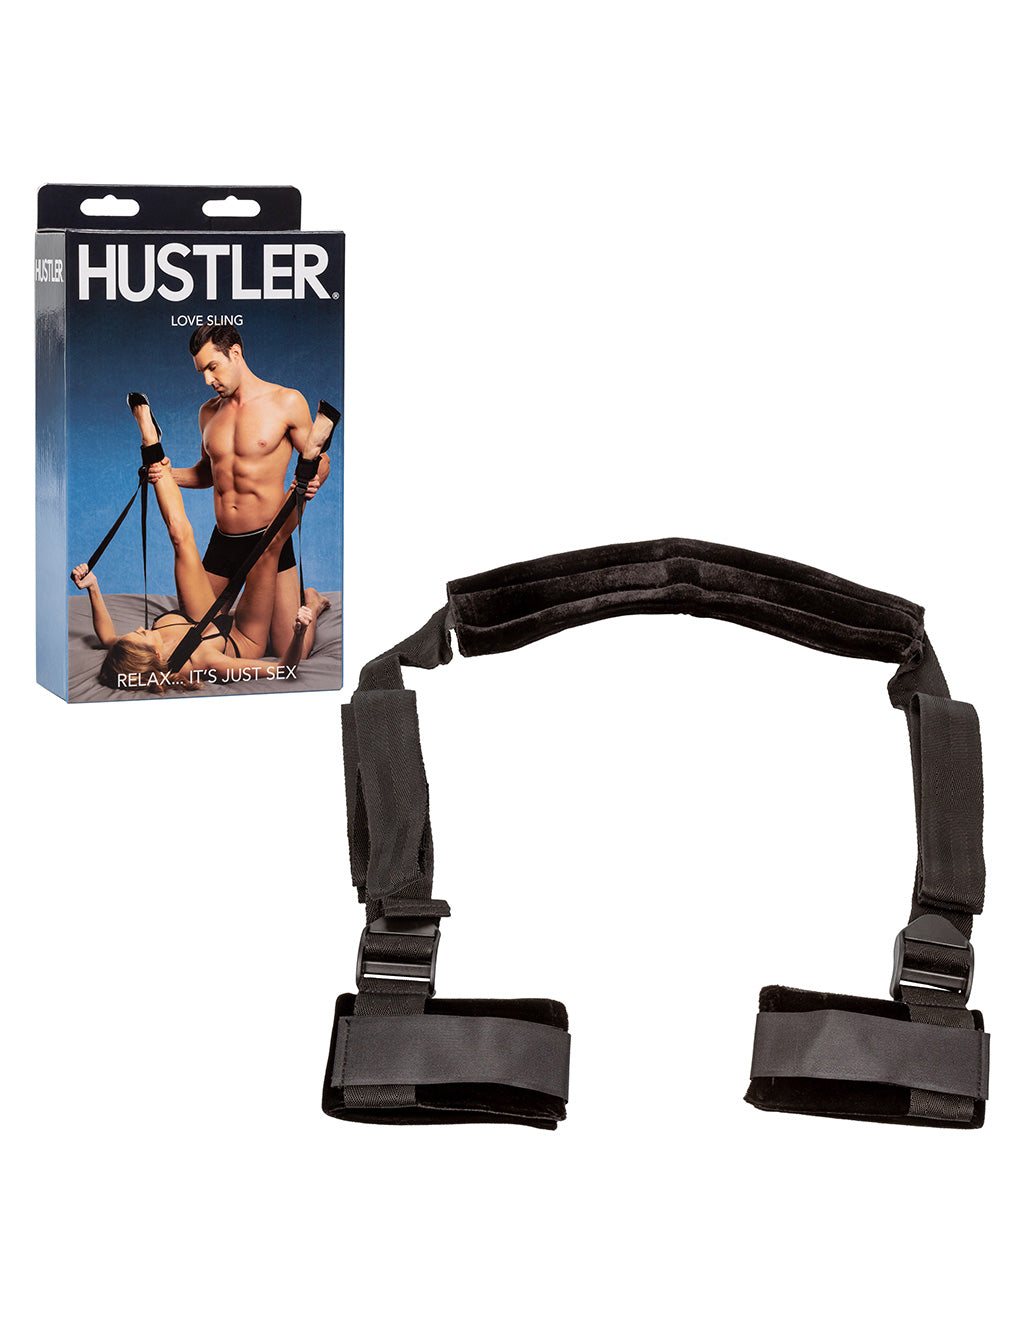 Hustler® Love Sling- With box